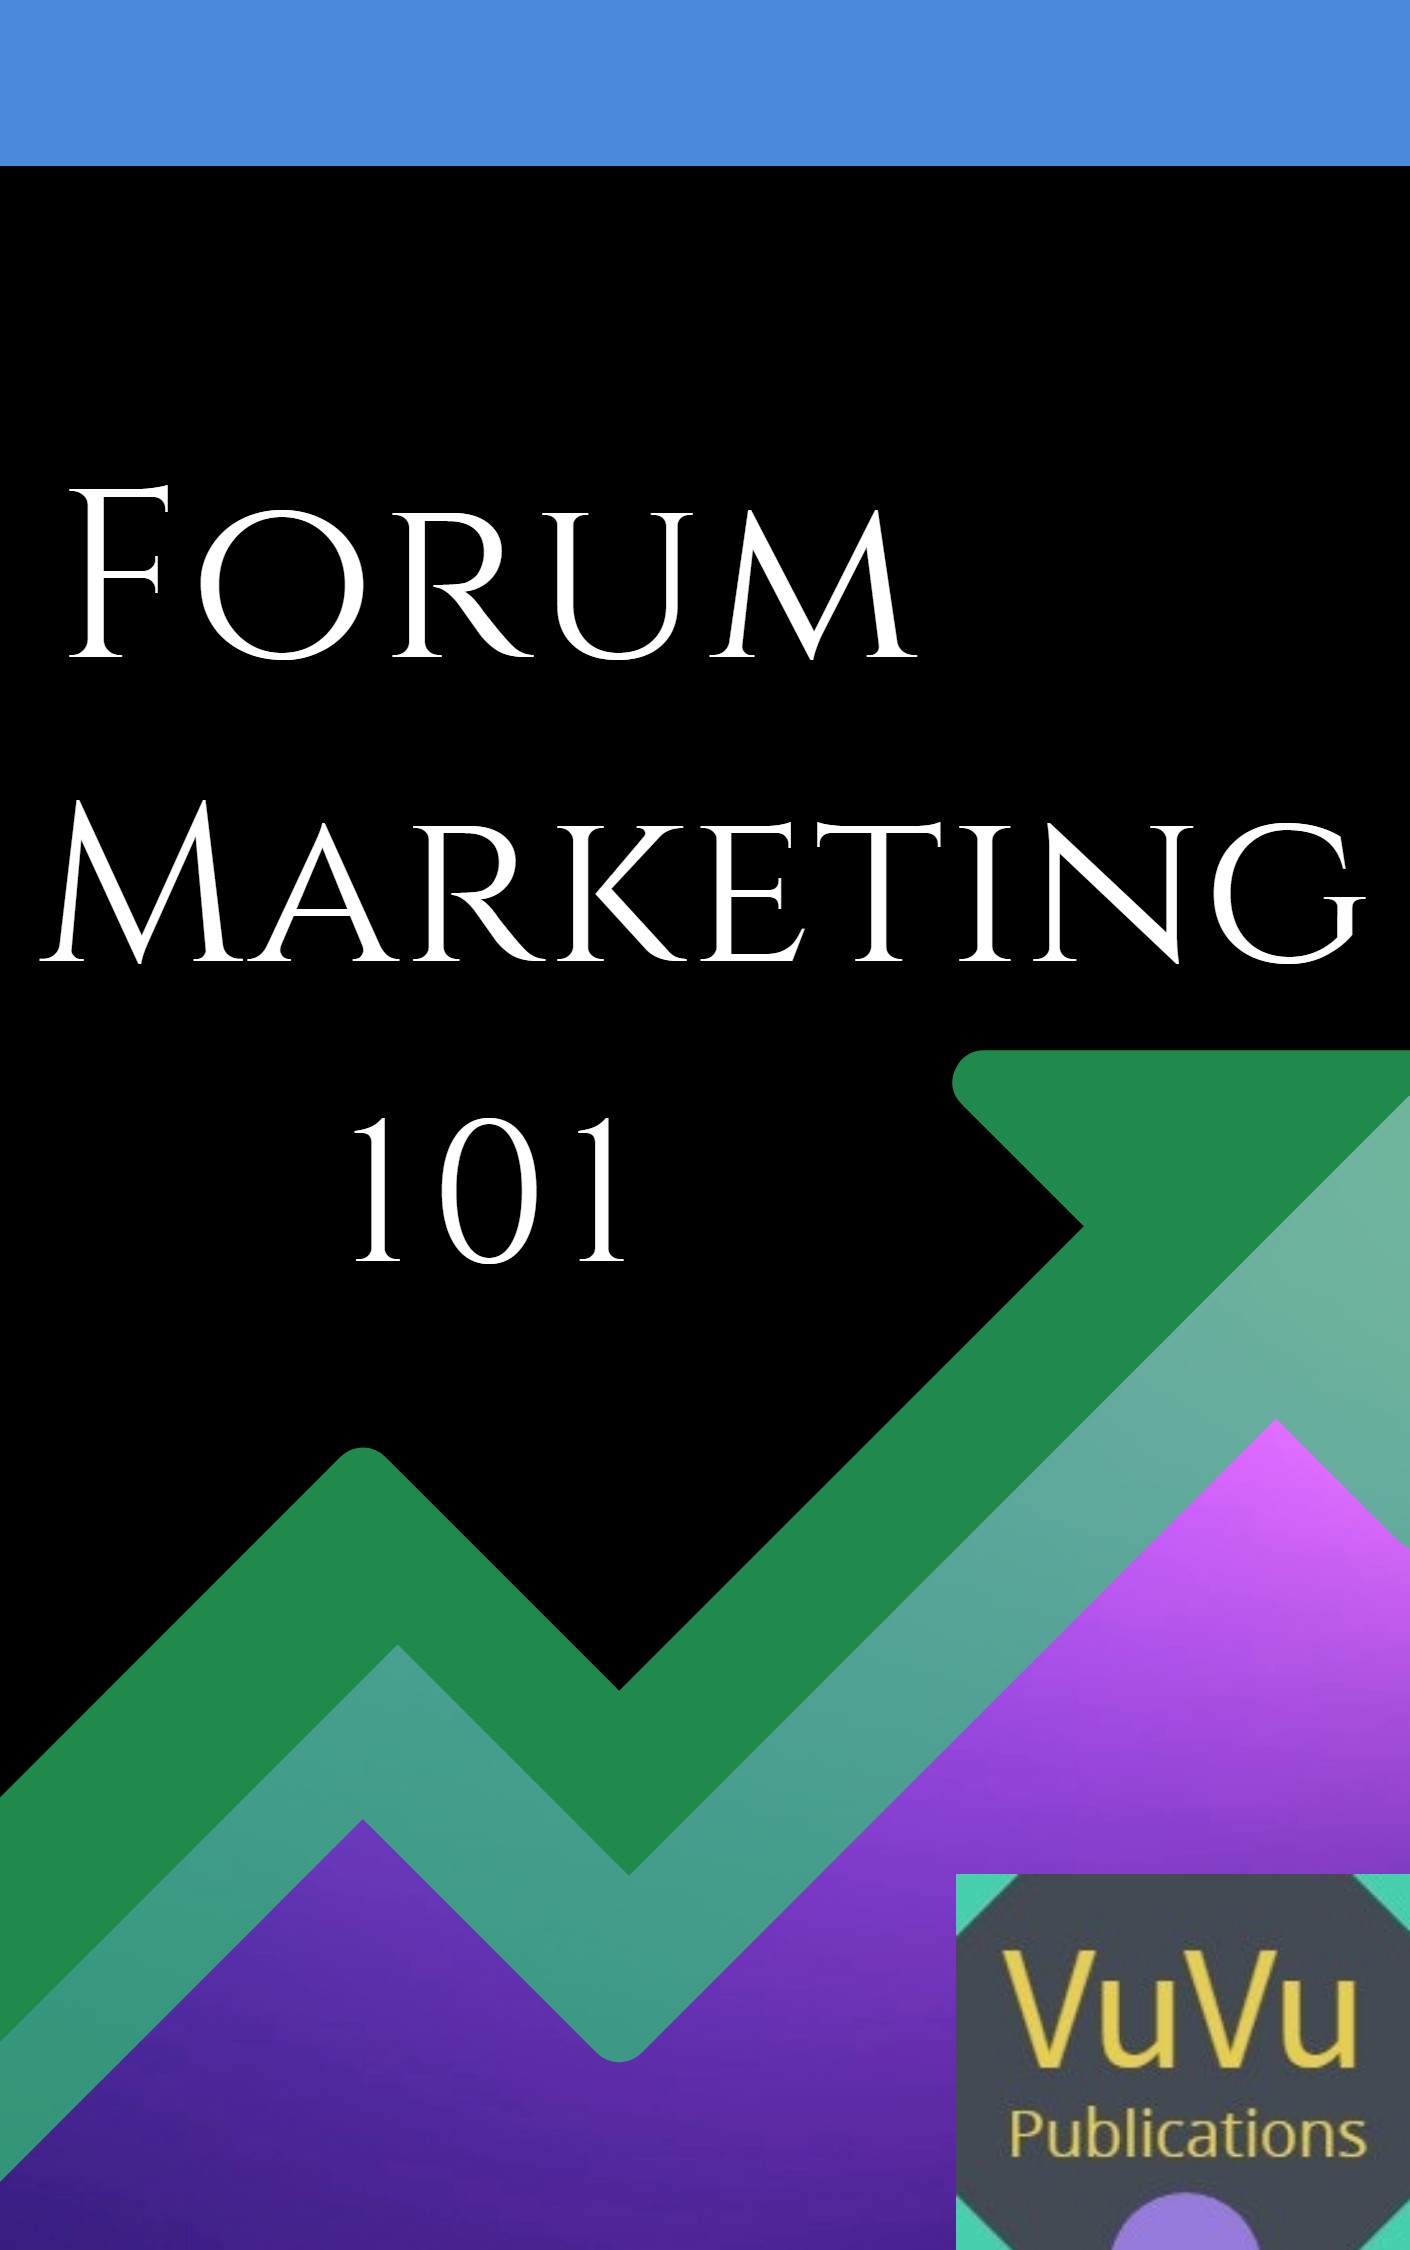 Forum Marketing 101